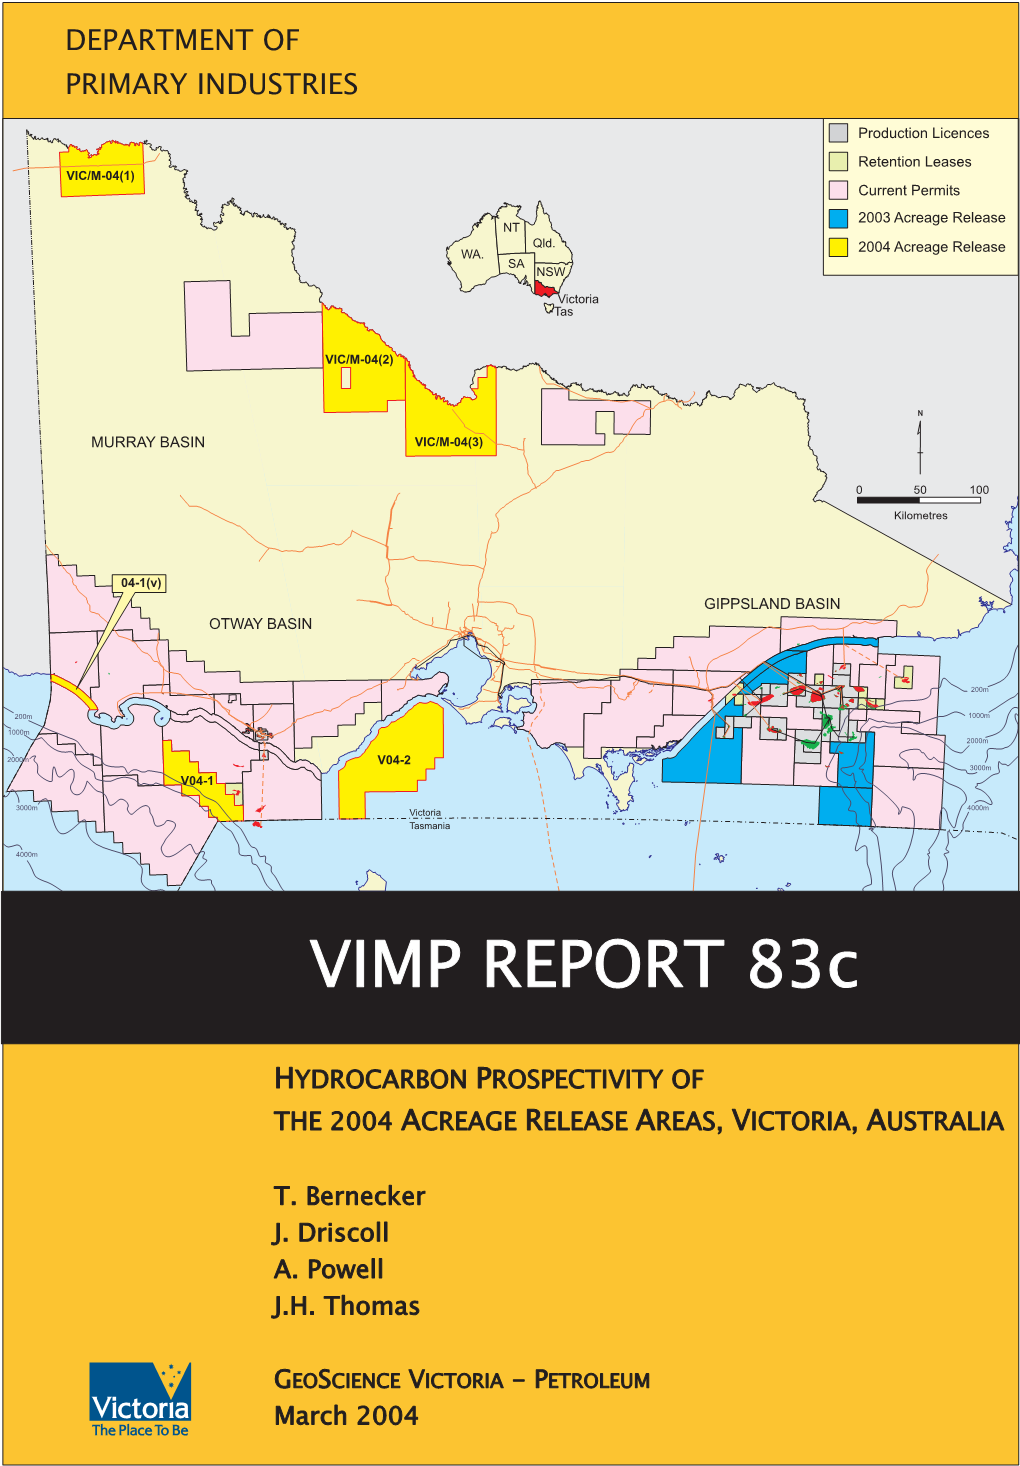 VIMP REPORT 83C